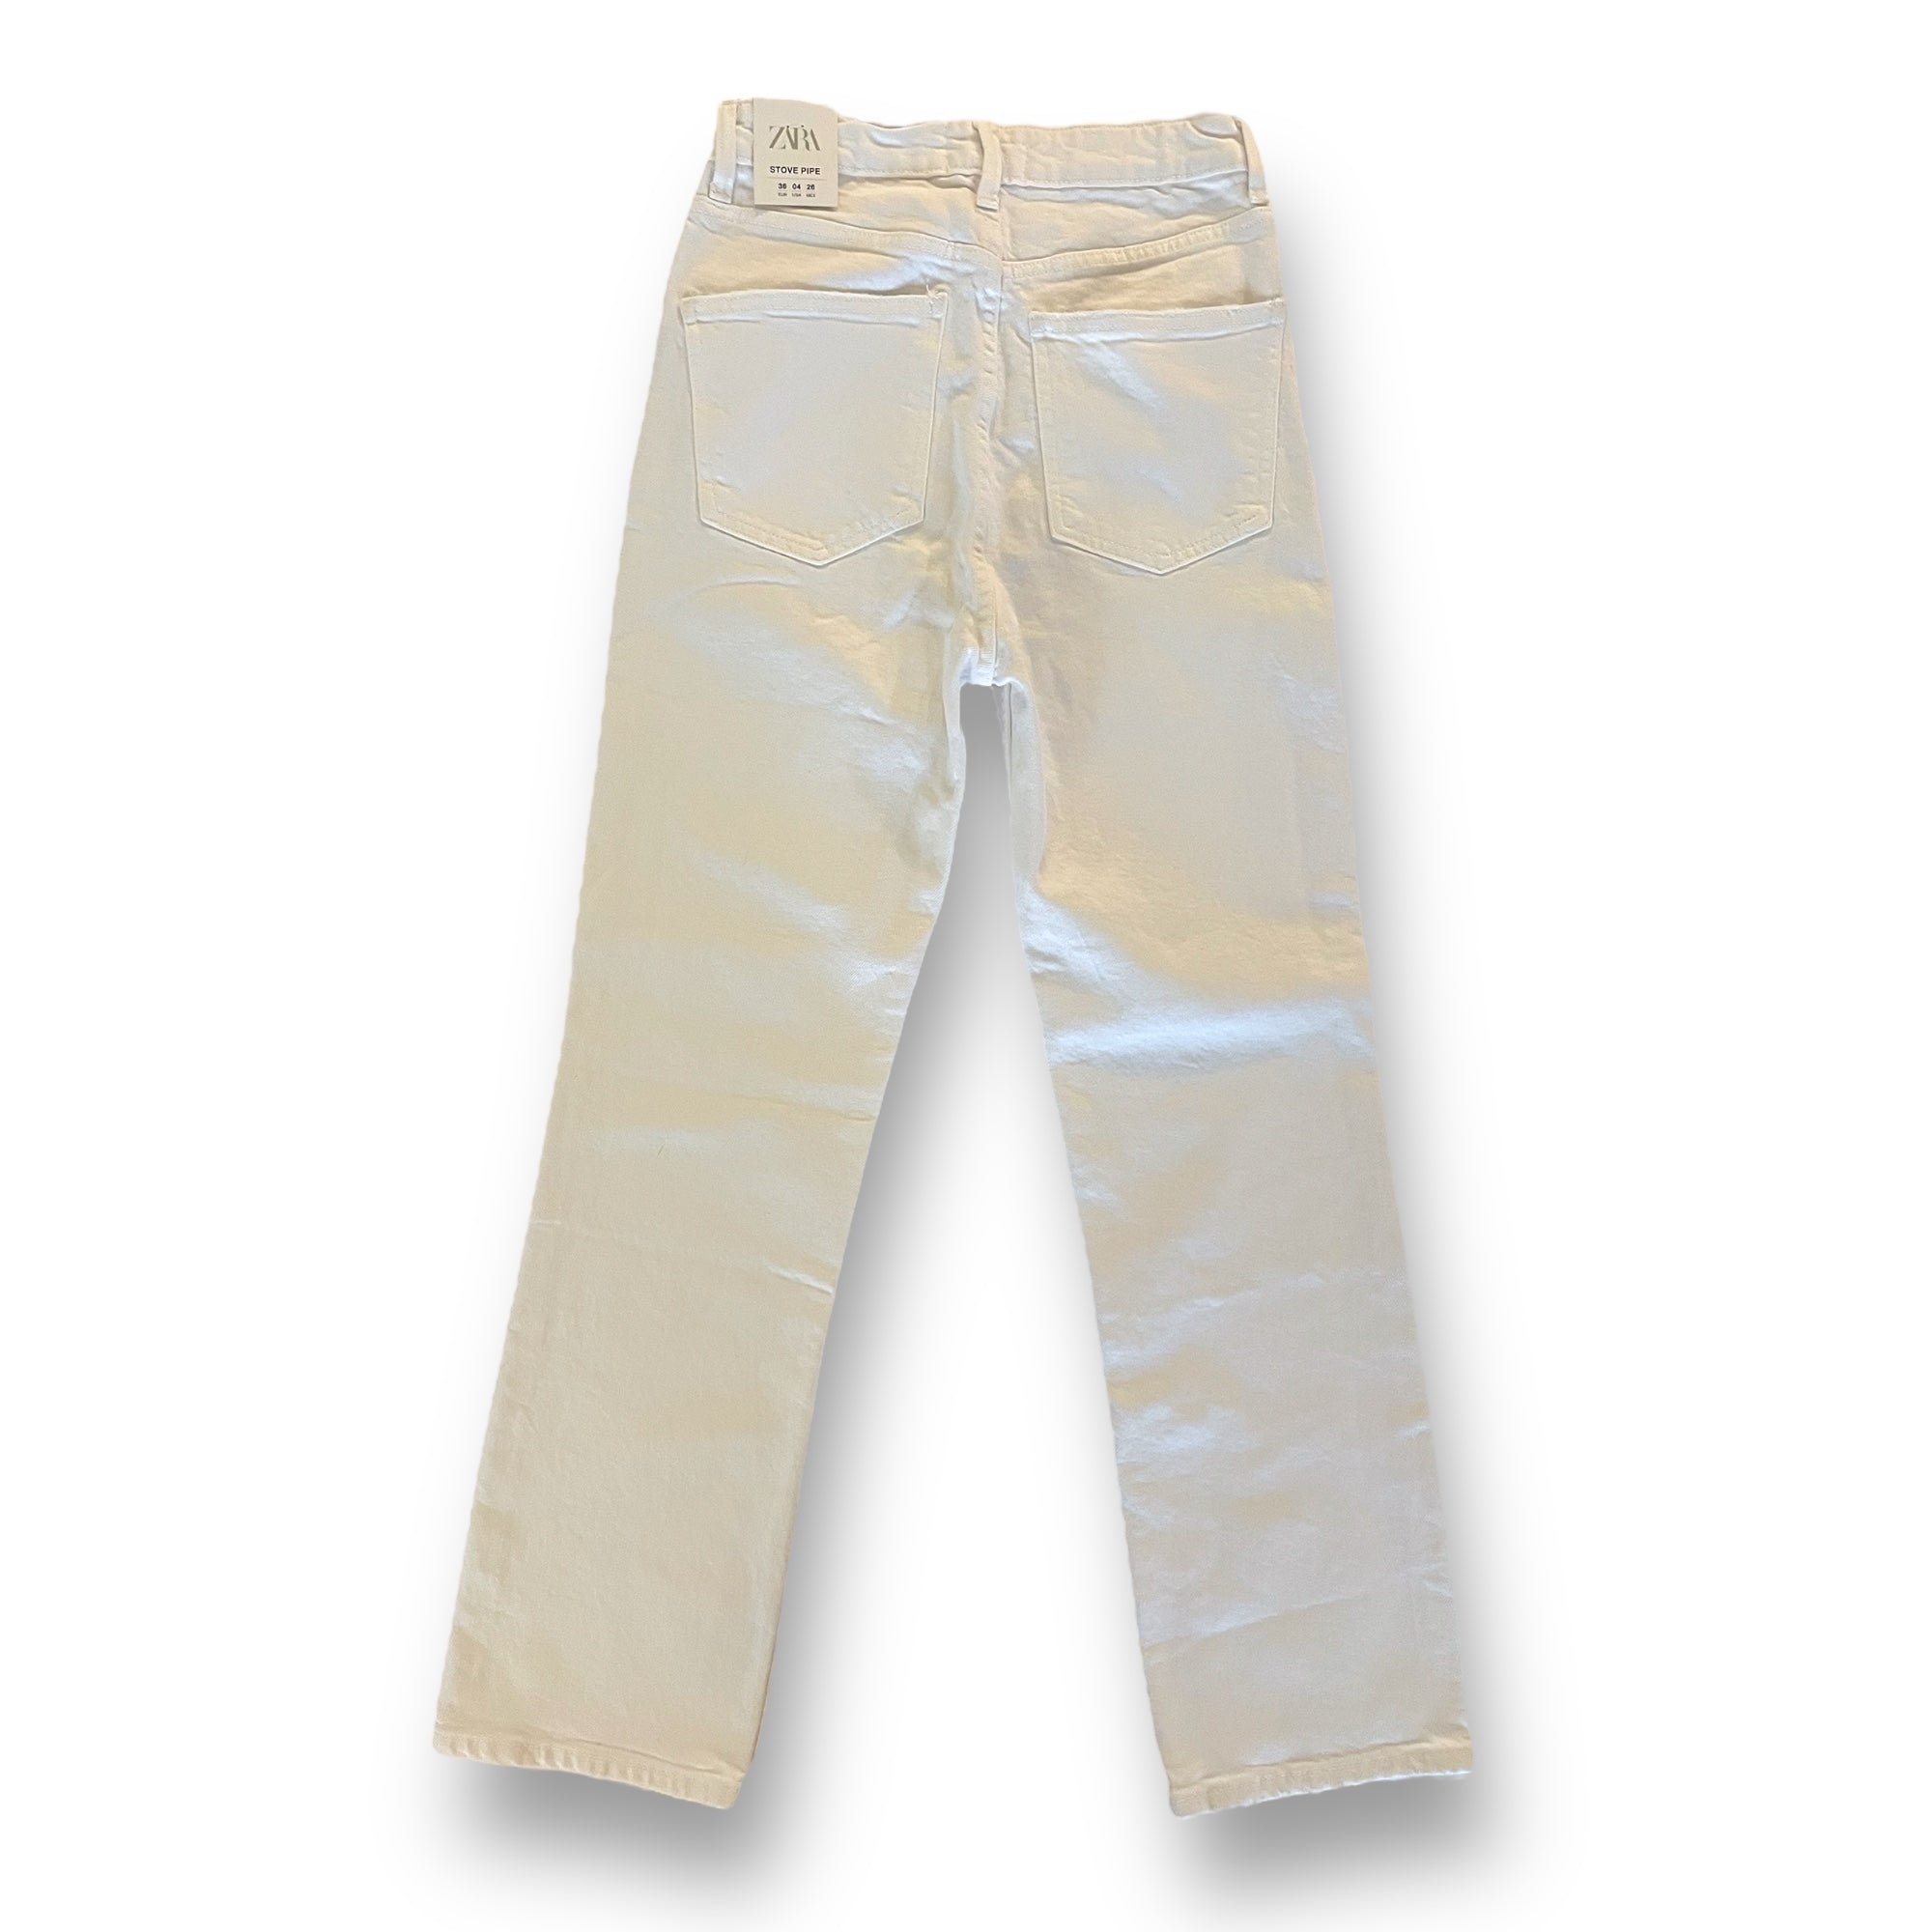 Styring ambulance Monarch ZARA High-Rise STOVE PIPE White Denim Jeans |Size: EU 34 US 4